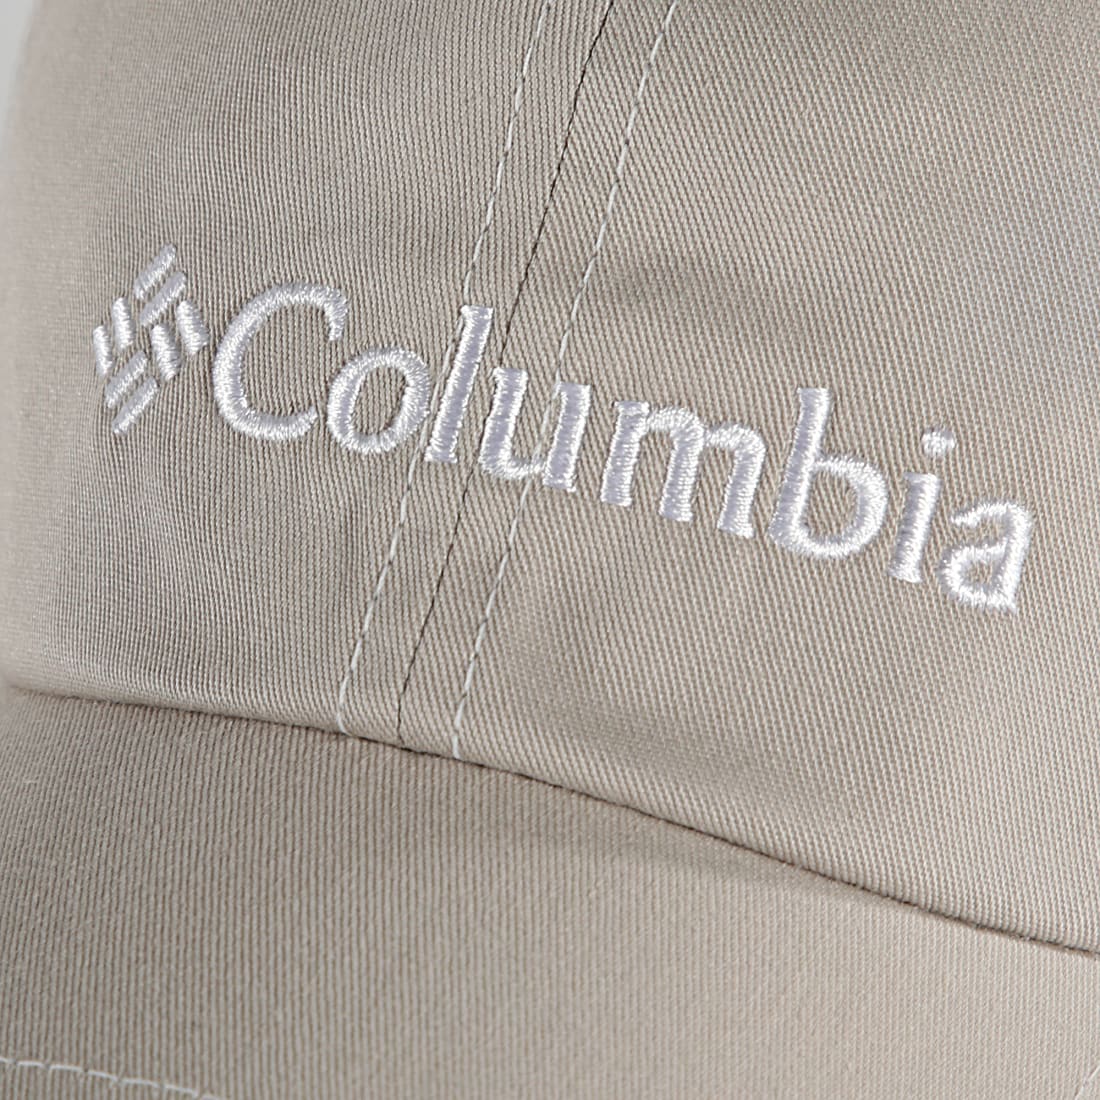 Columbia Casquette Roc II Gris- Size? France